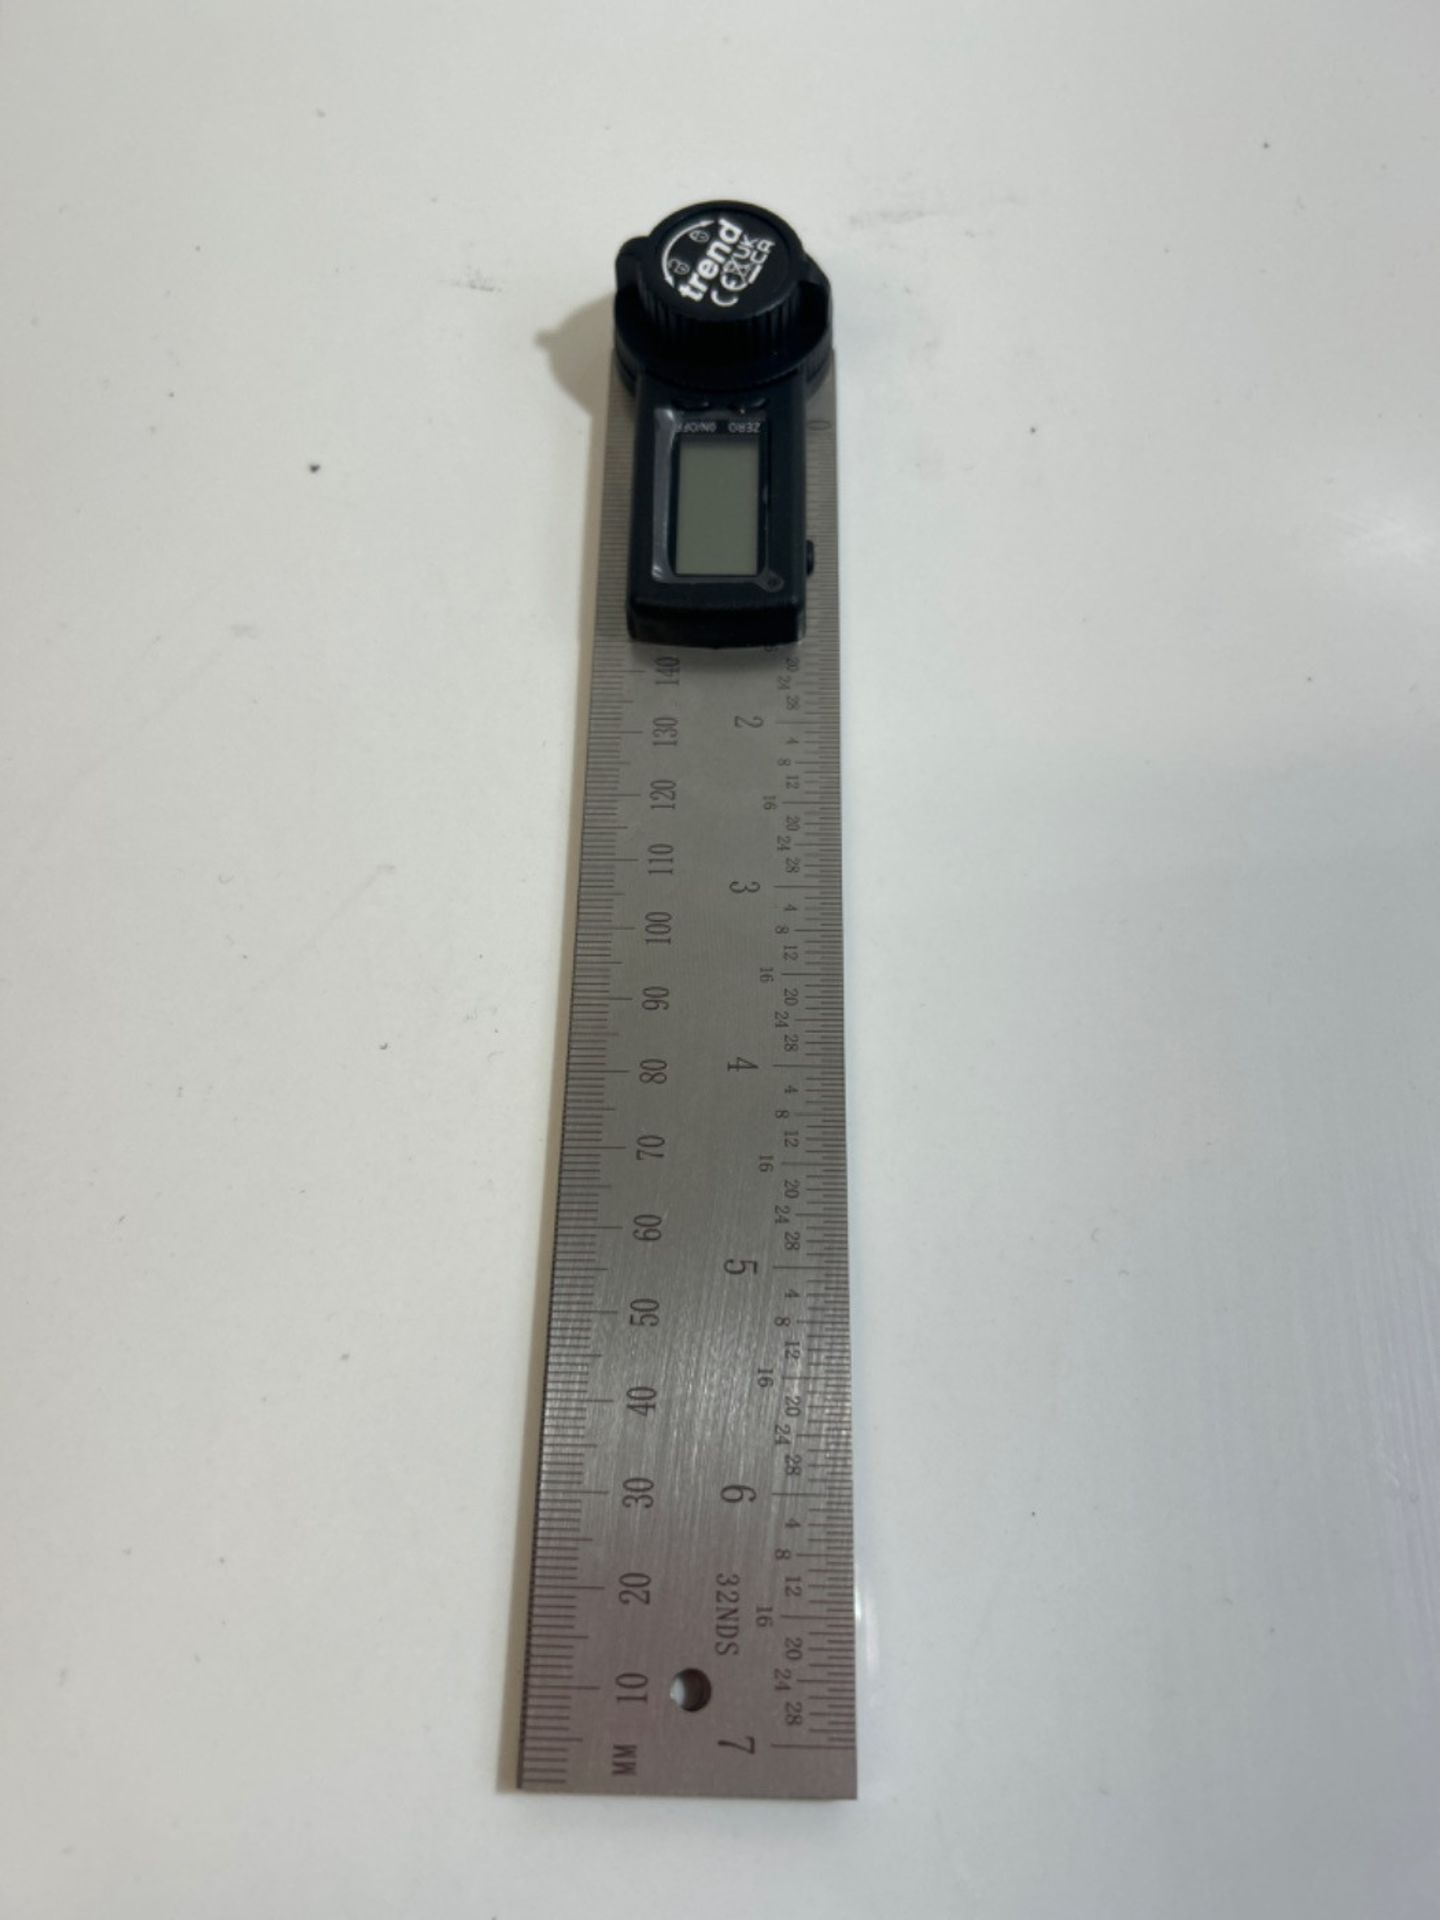 Trend 7 inch Digital Angle Finder Ruler, Precise Internal & External Measurements, DAR/200 - Image 2 of 3